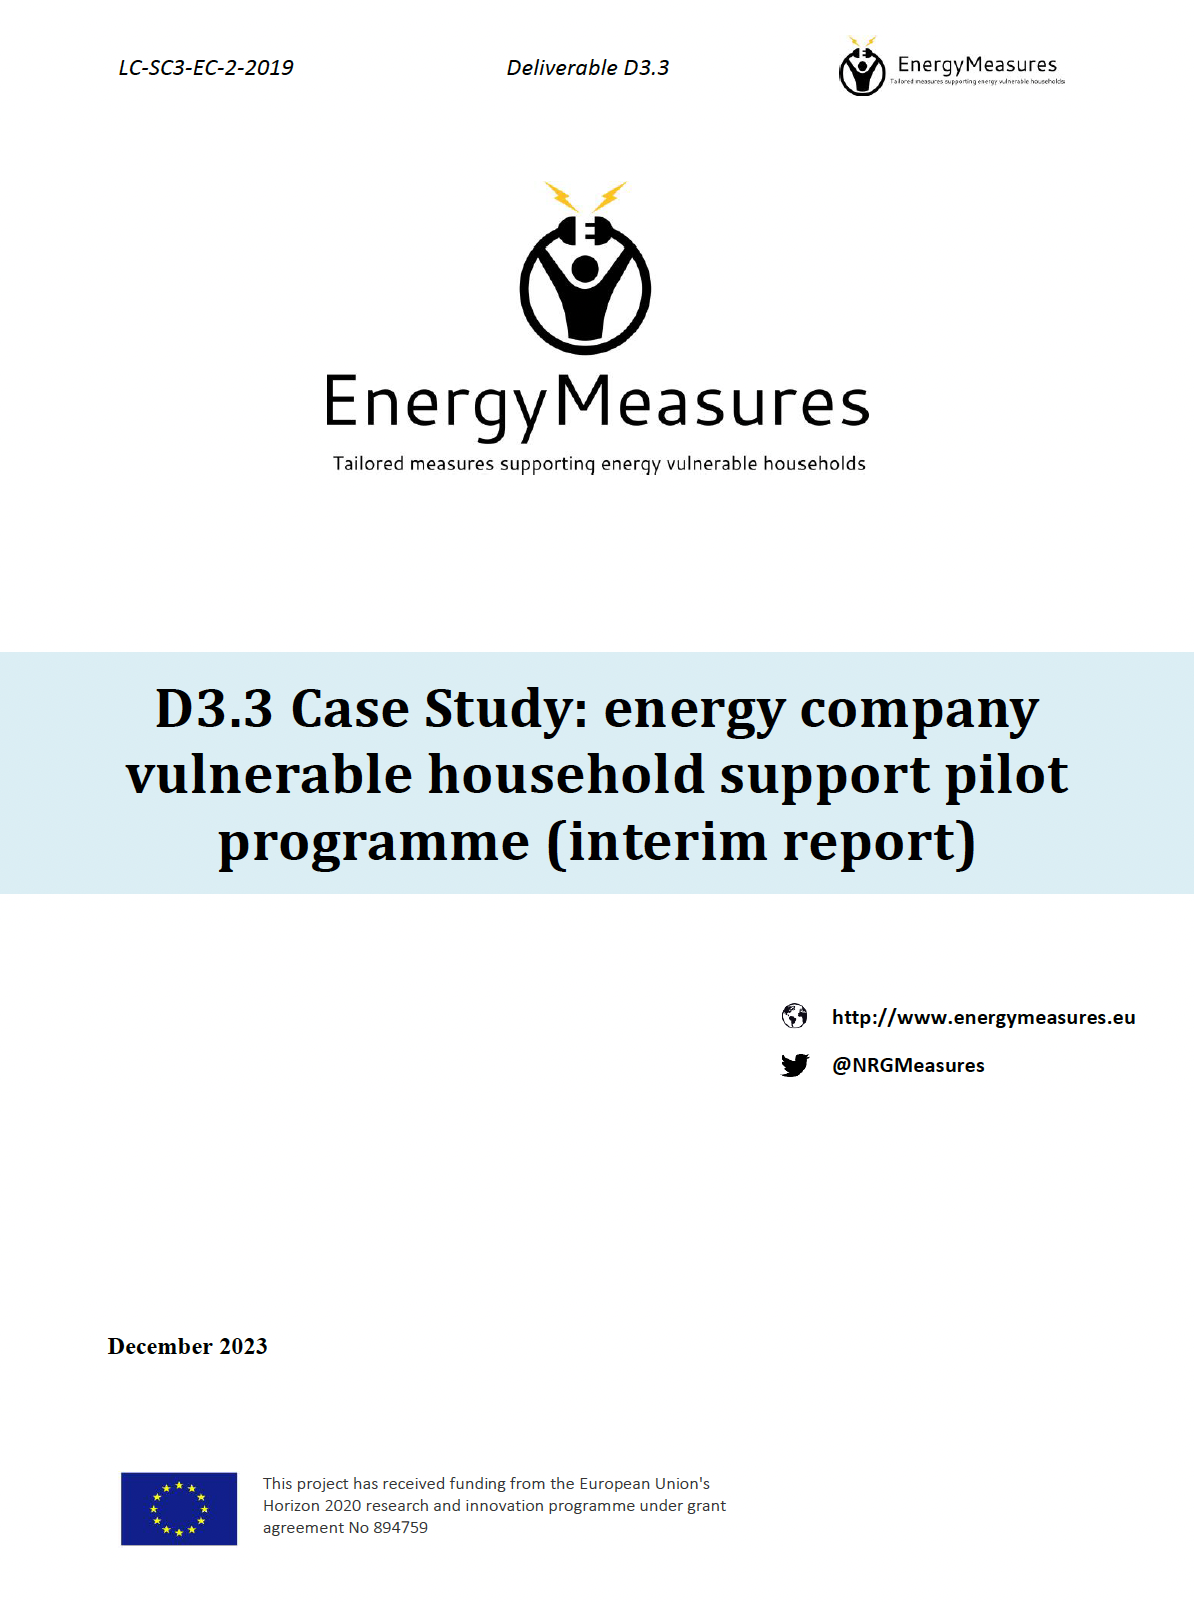 D3.3 Case Study: energy company vulnerable household support pilot programme (interim report)